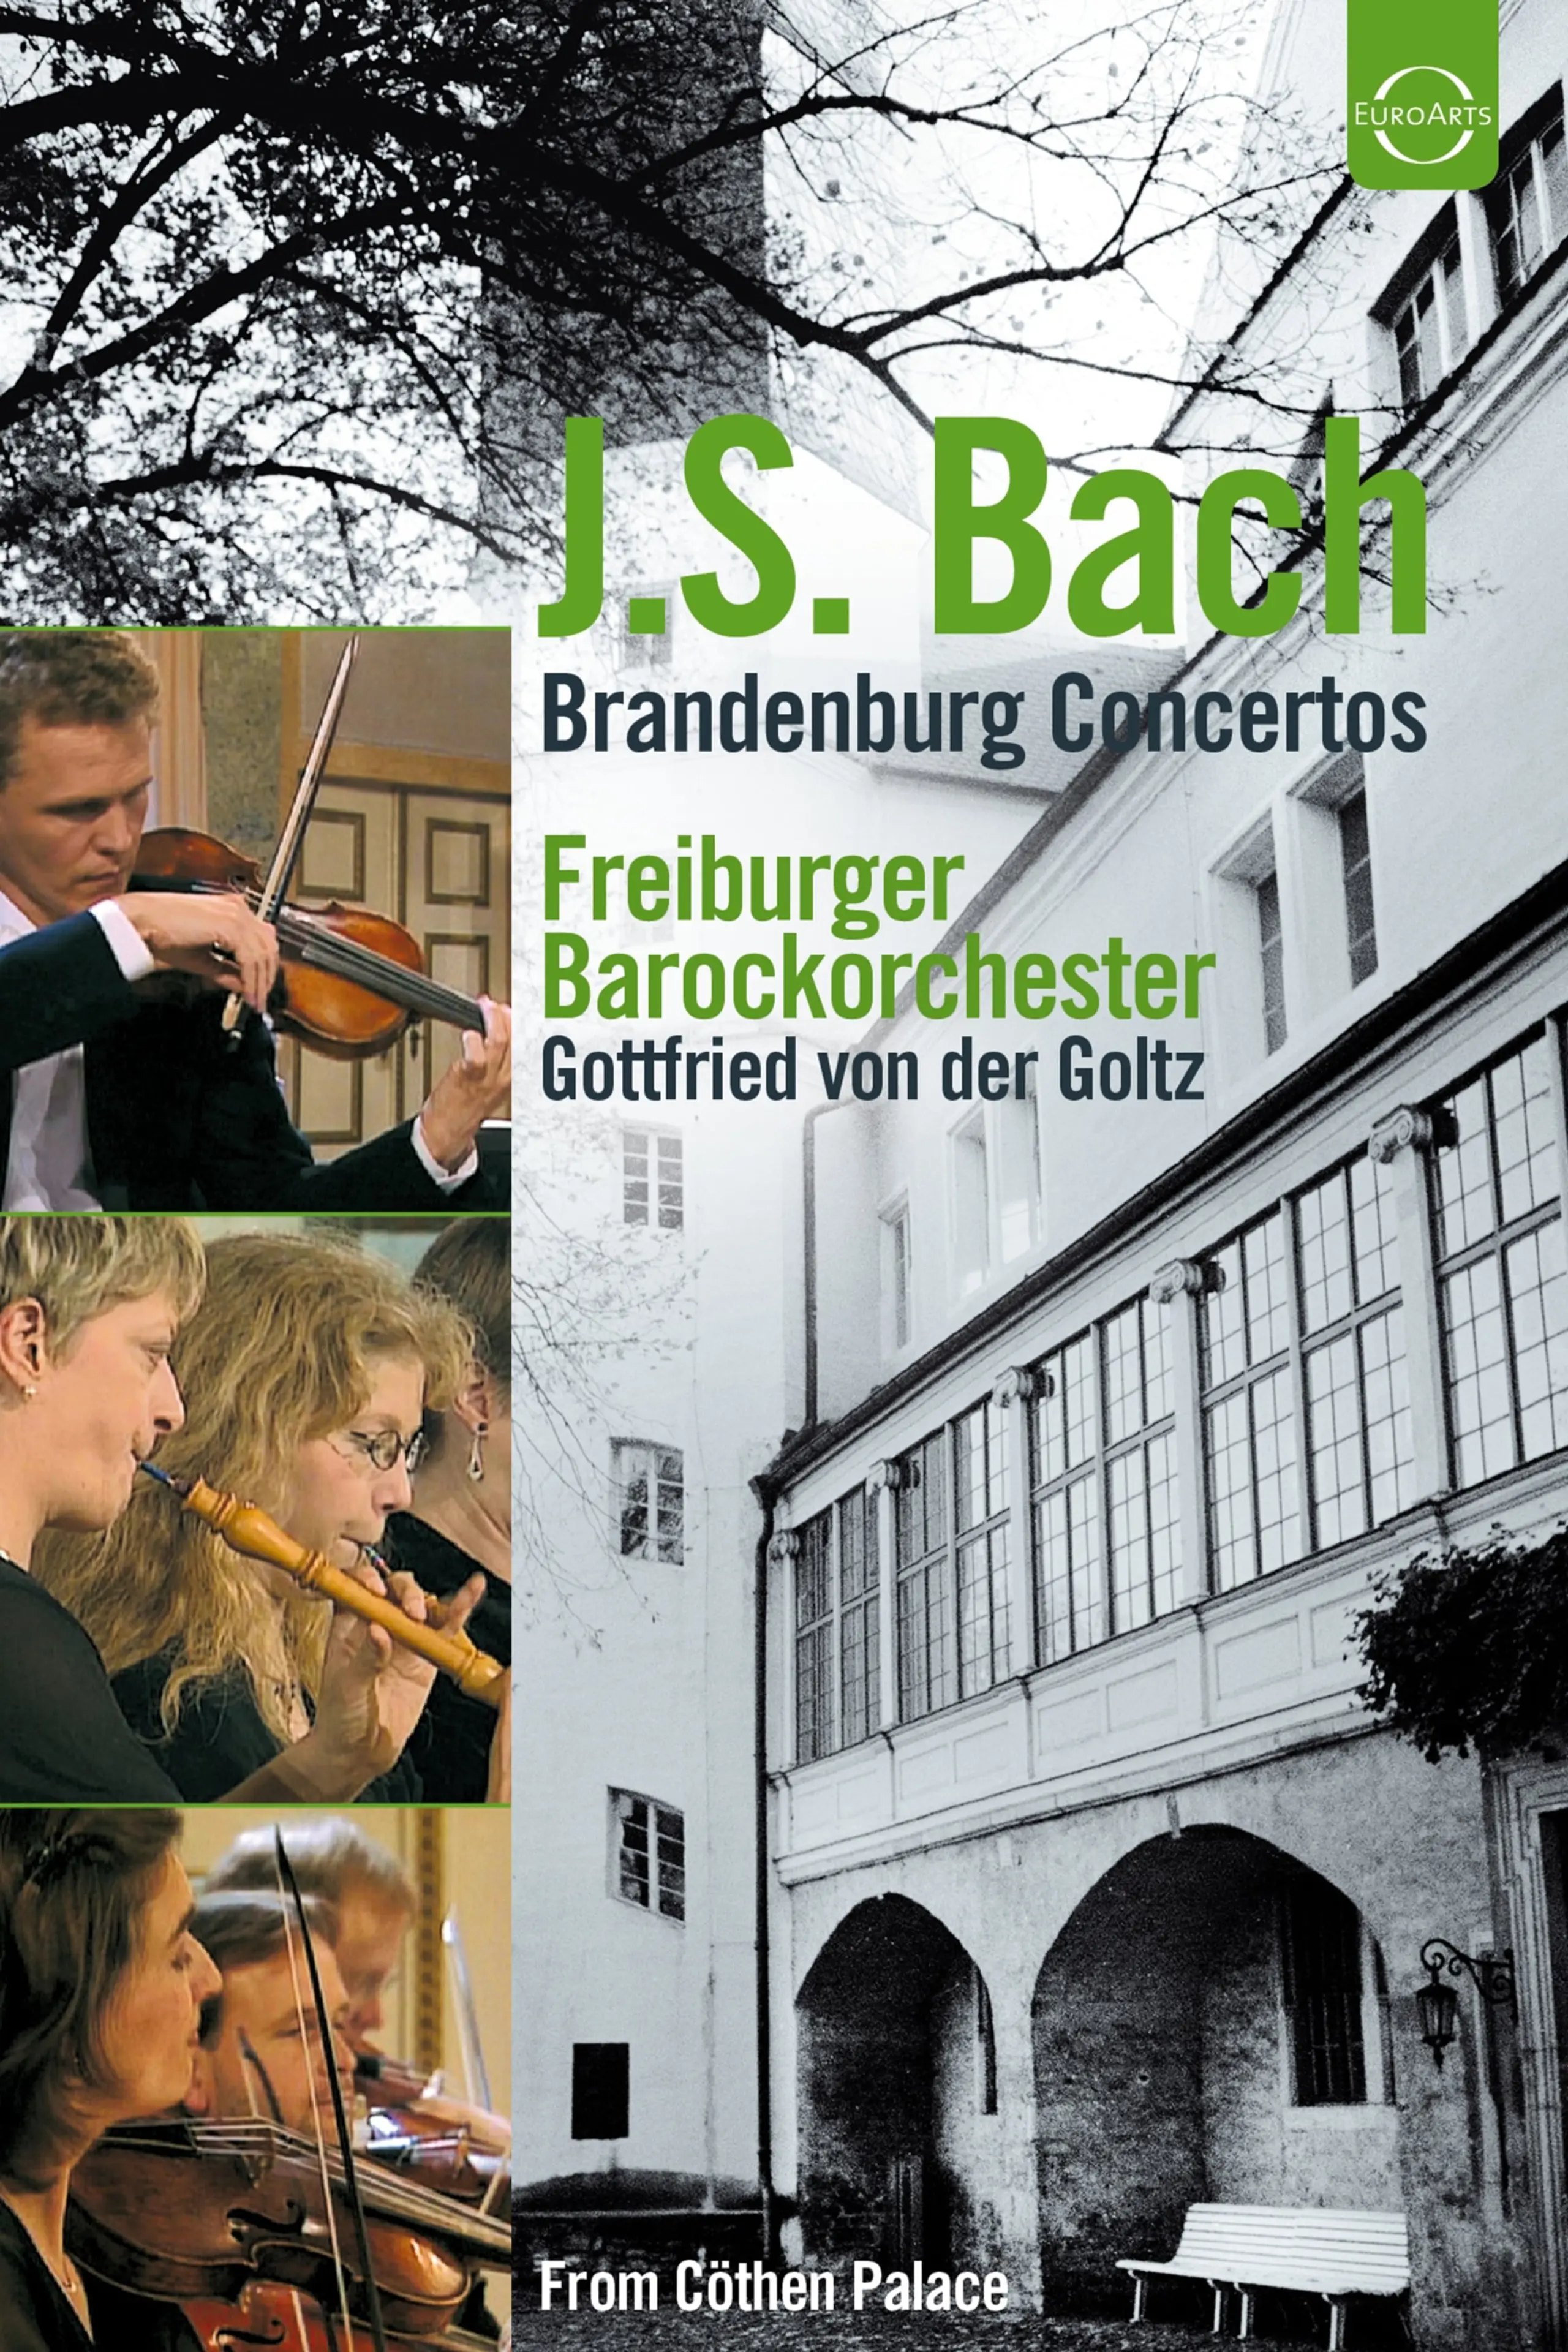 J.S. Bach - Brandenburg Concertos